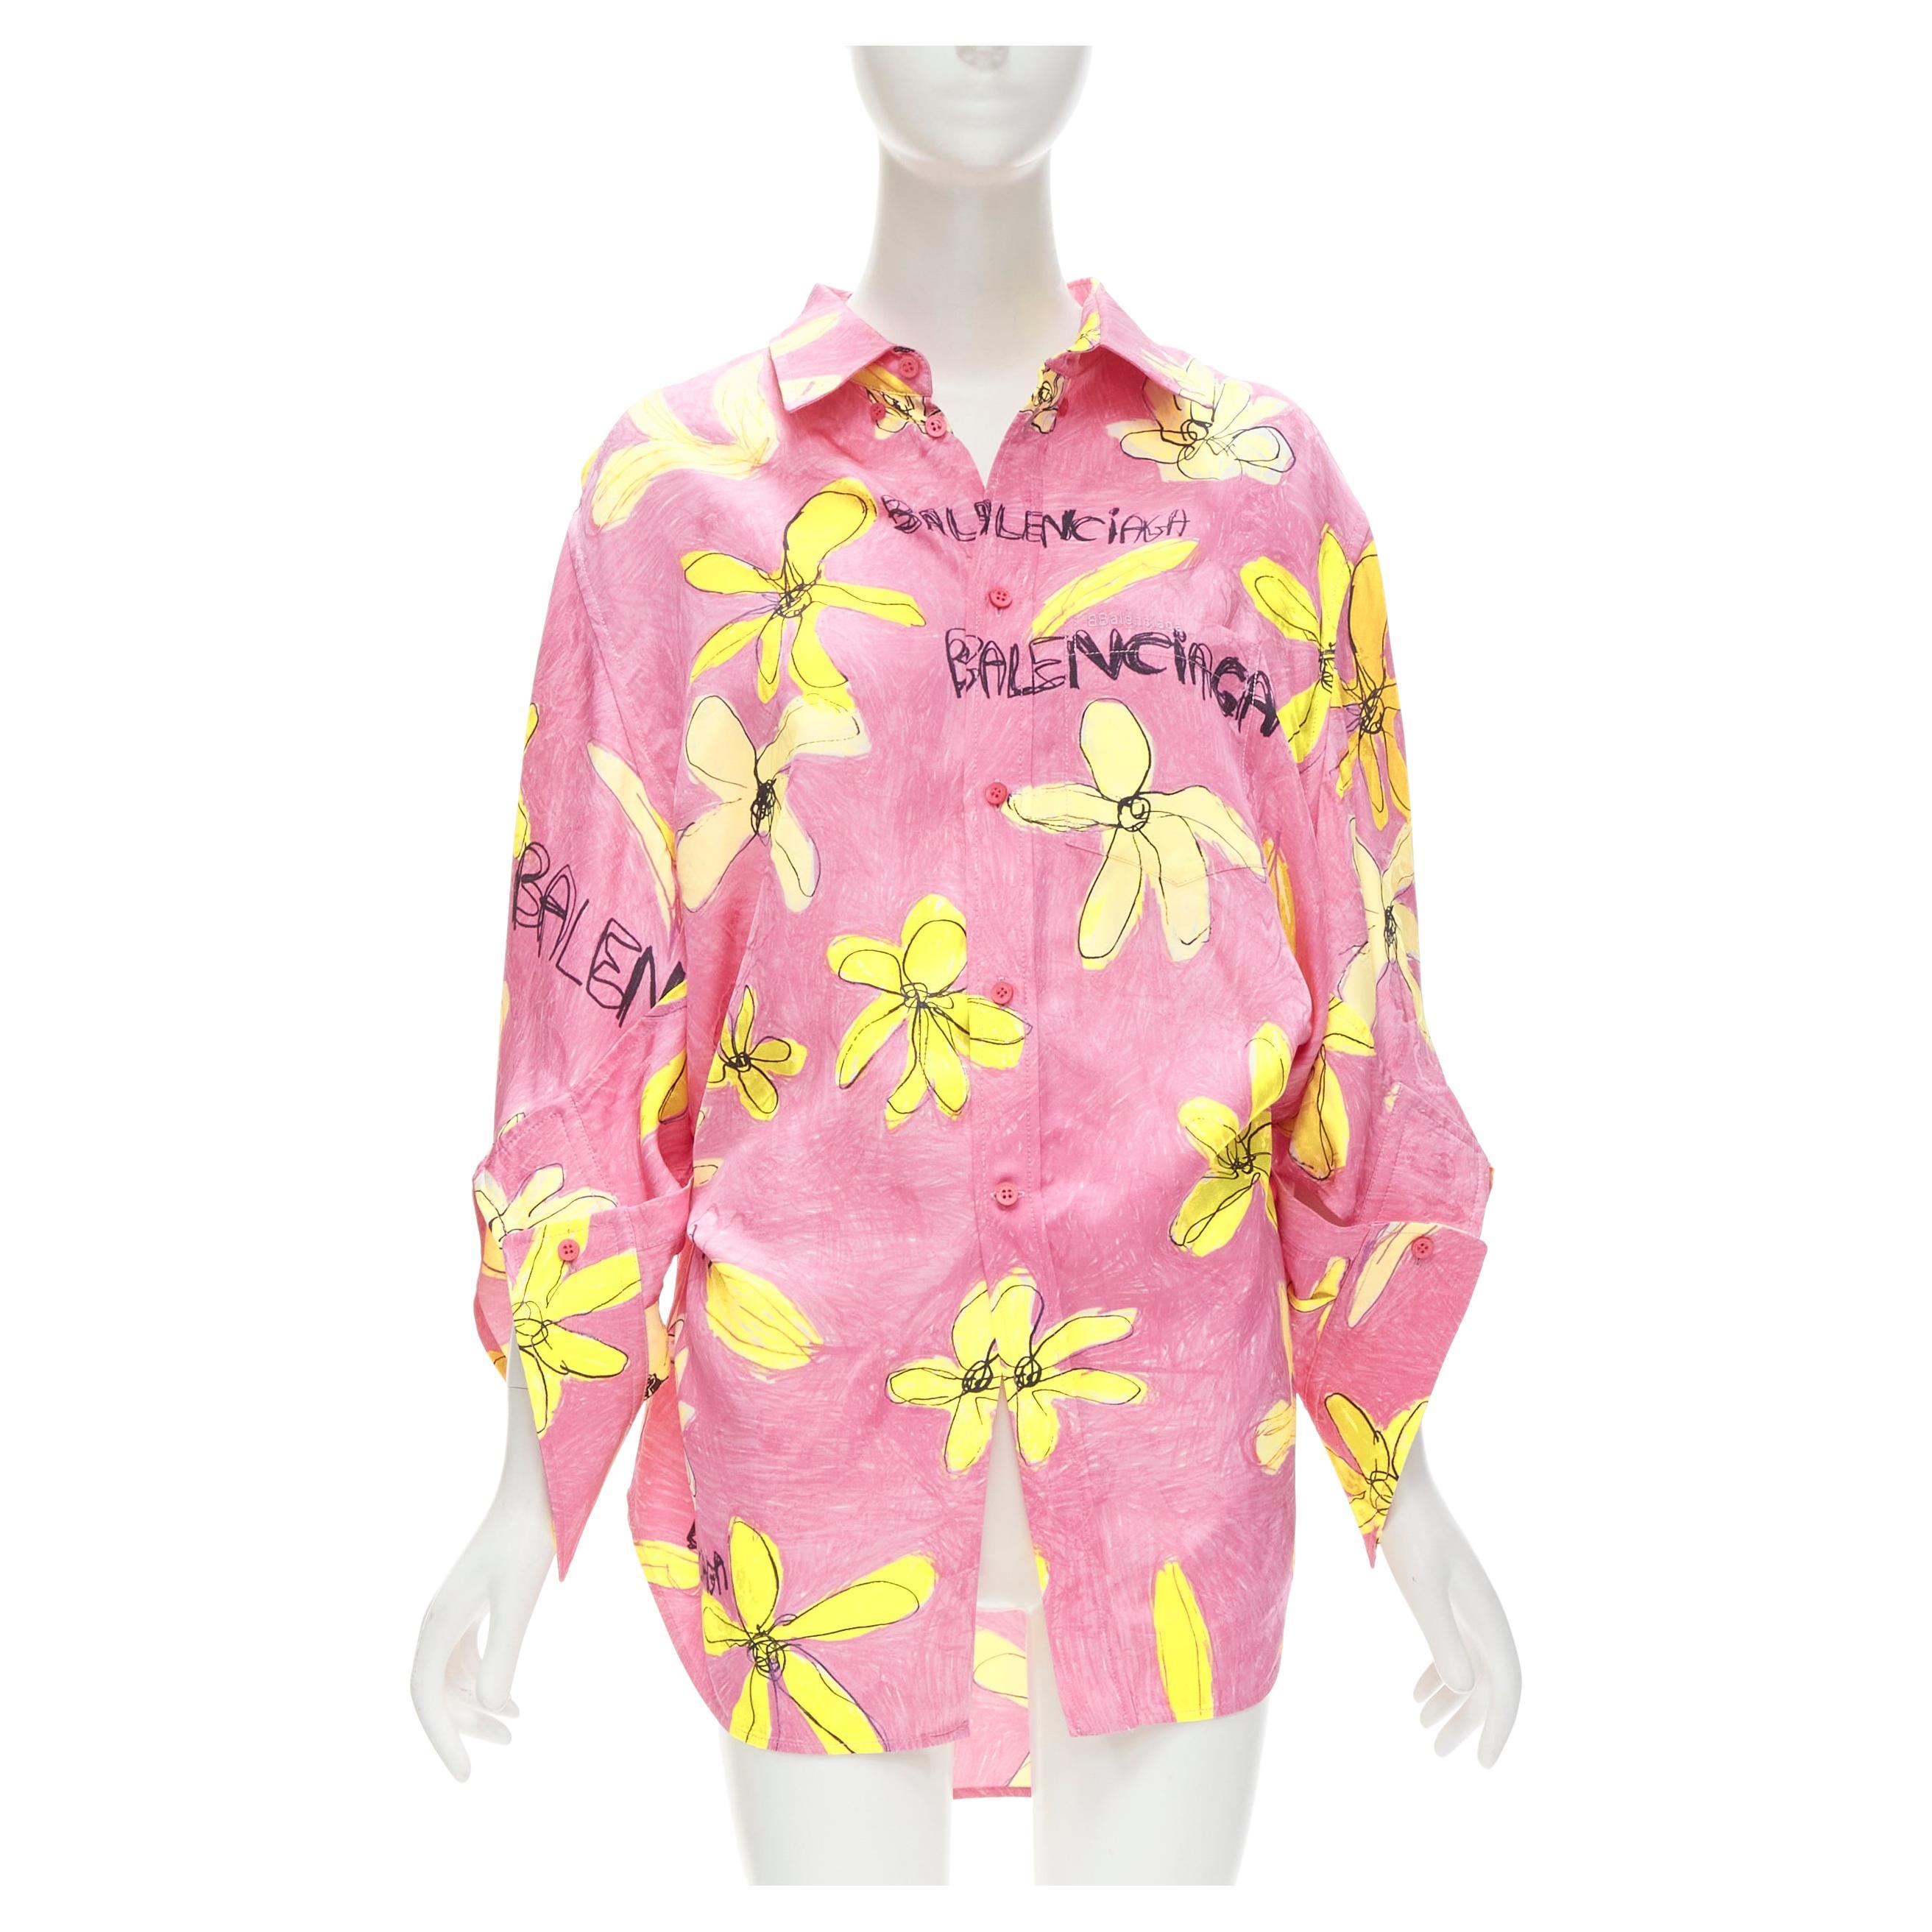 BALENCIAGA 2021 Julian Farade pink yellow floral deconstructed shirt FR34 XS